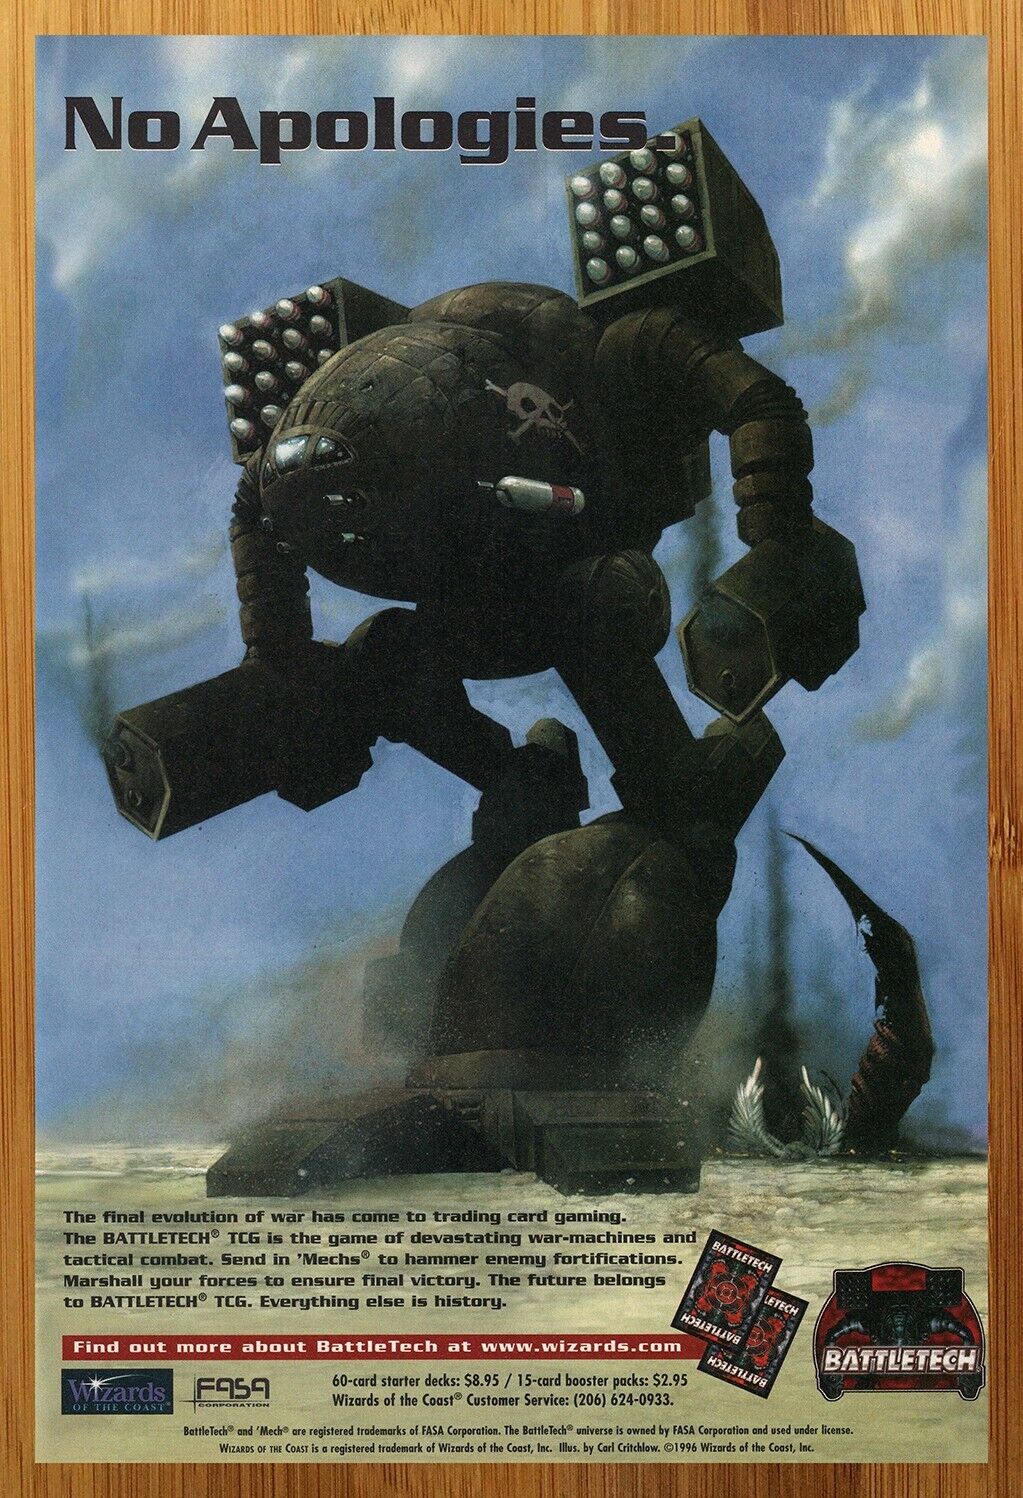 1996 Battletech Trading Card Game Vintage Print Ad/Poster Mech TCG CCG Promo Art